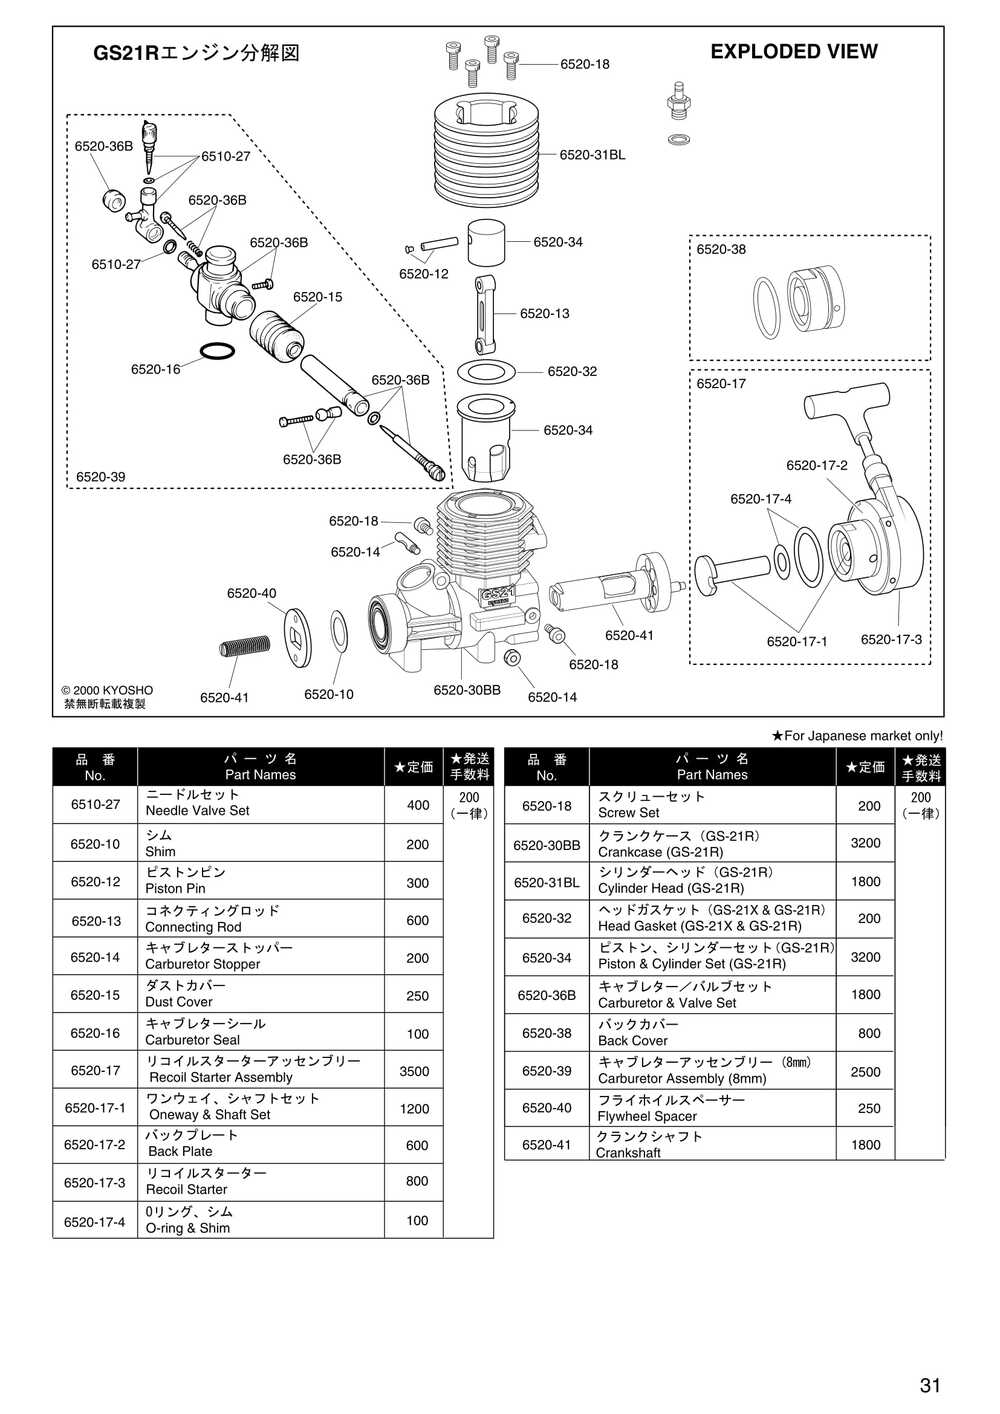 Kyosho - 31041 - Fantom Sports - Manual - Page 31